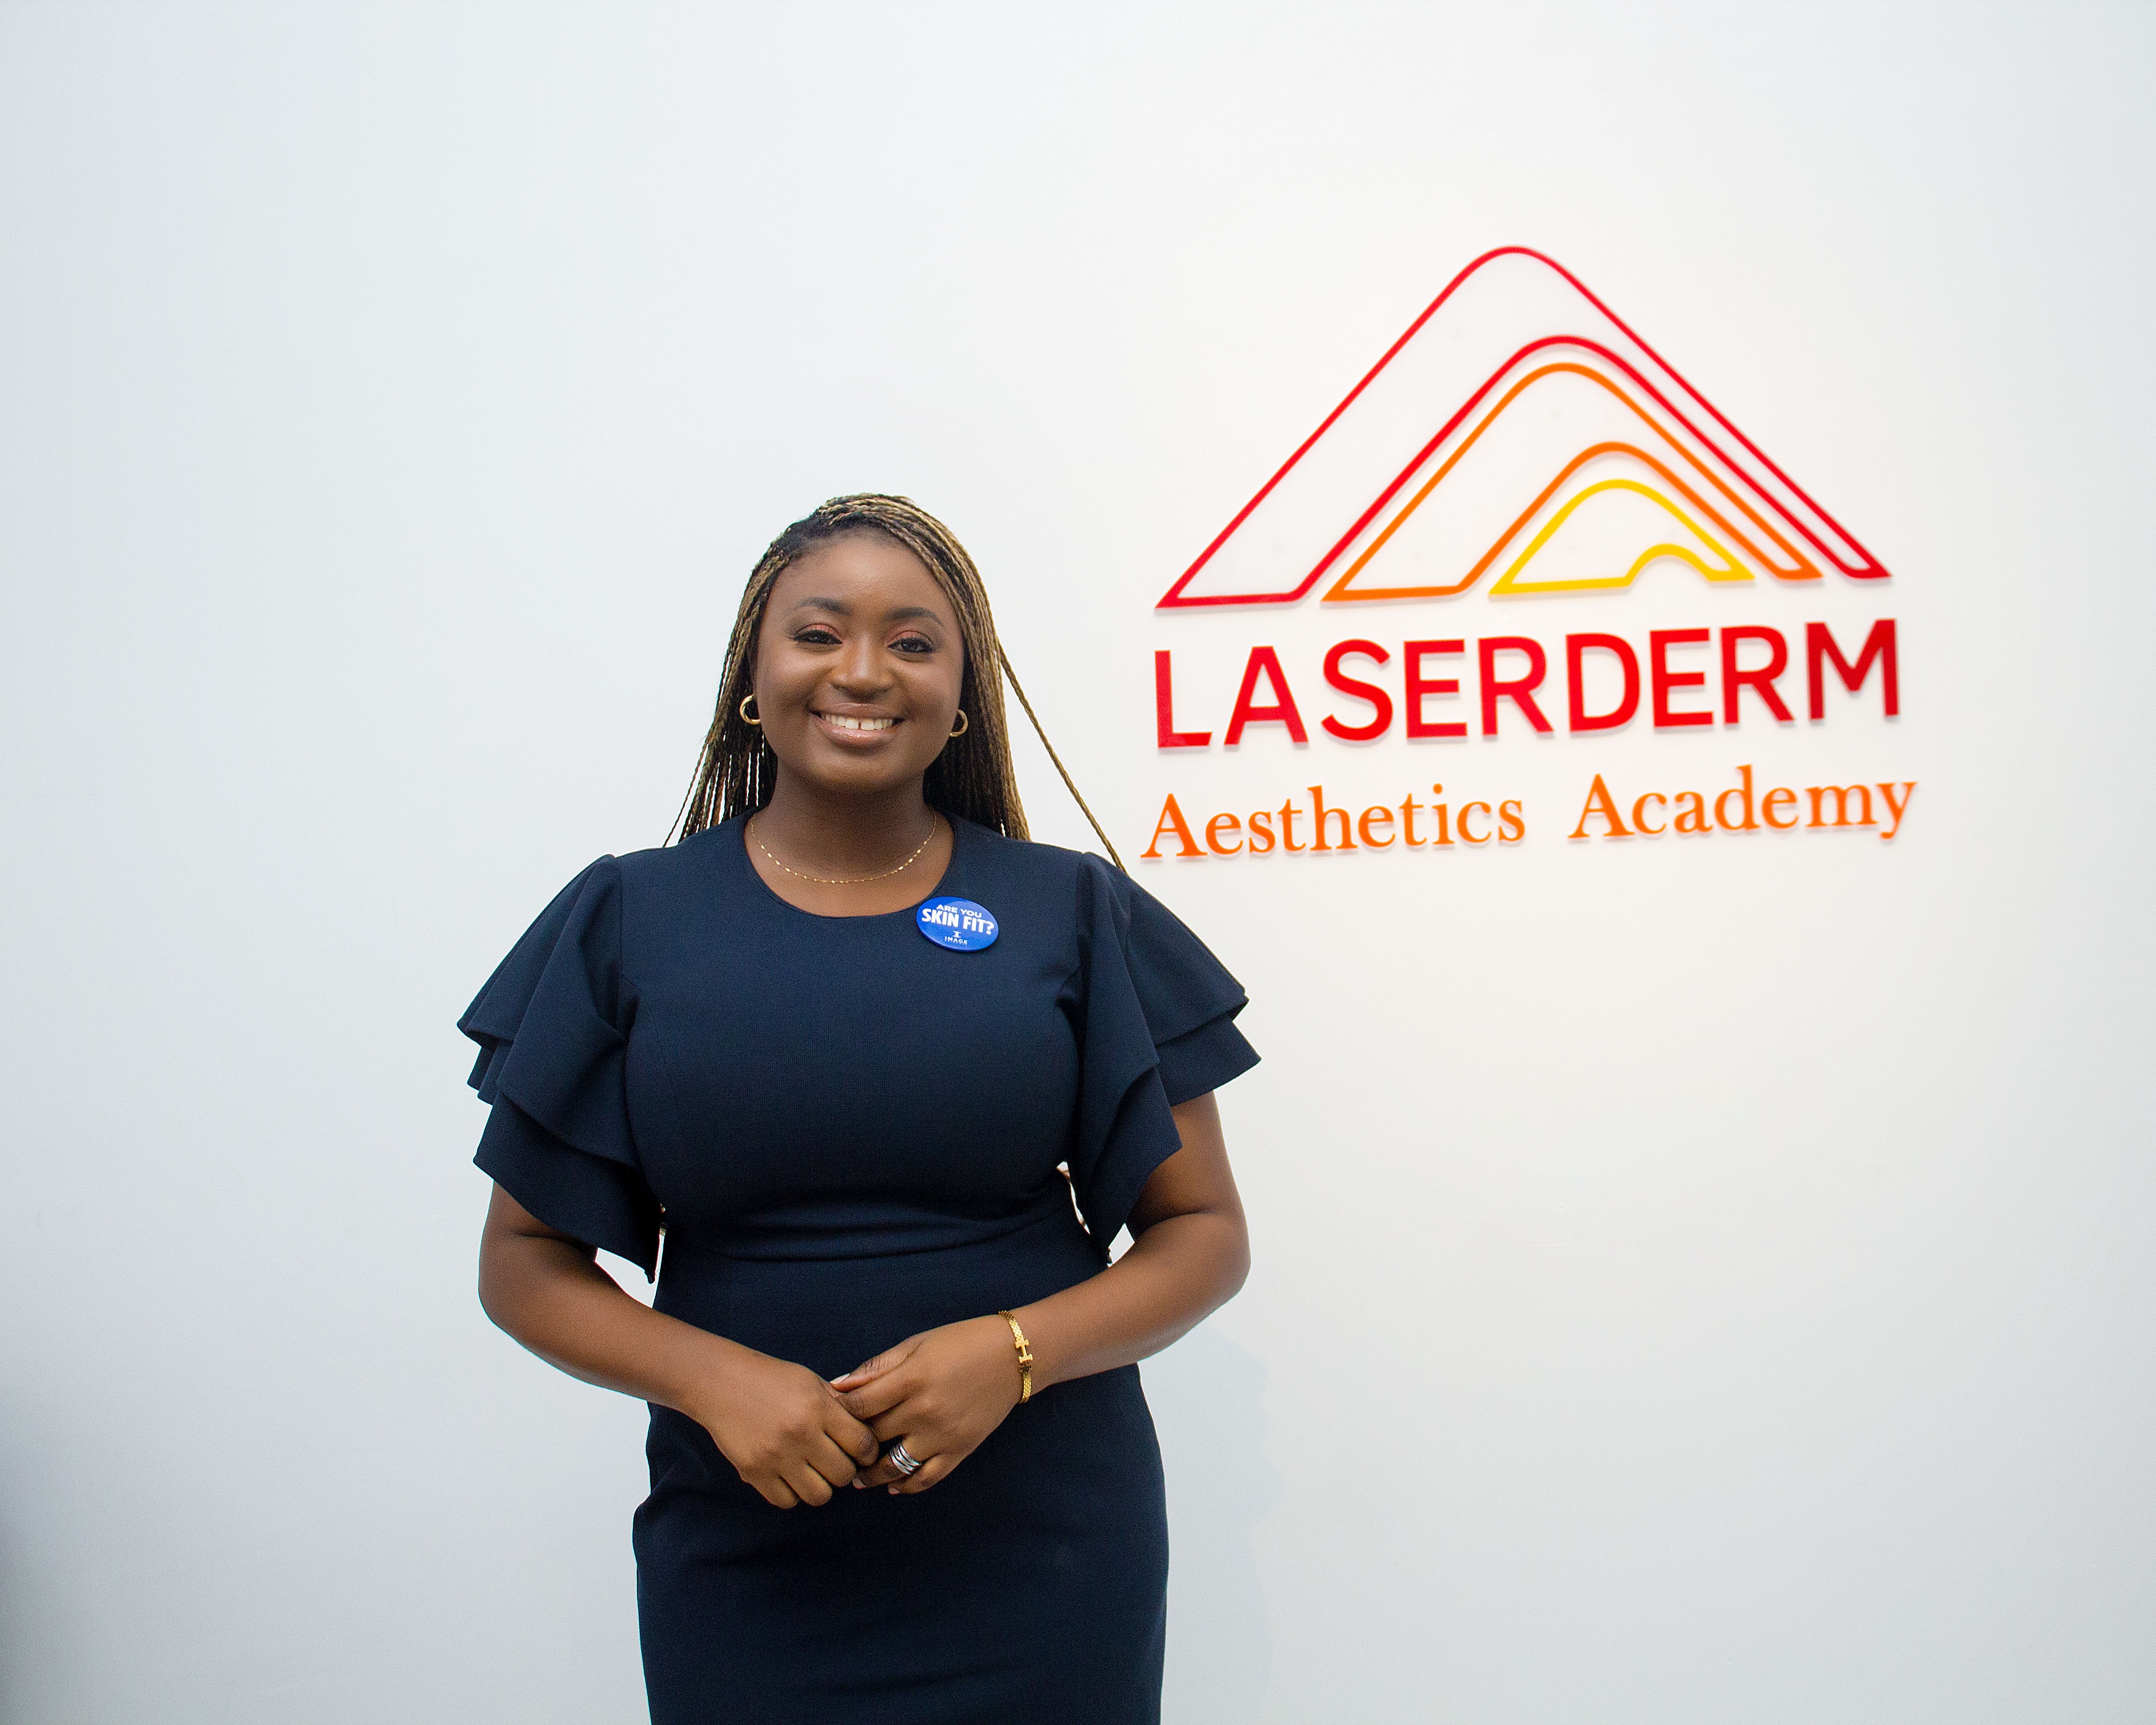 Laserderm Aesthetics Academy Student Learning